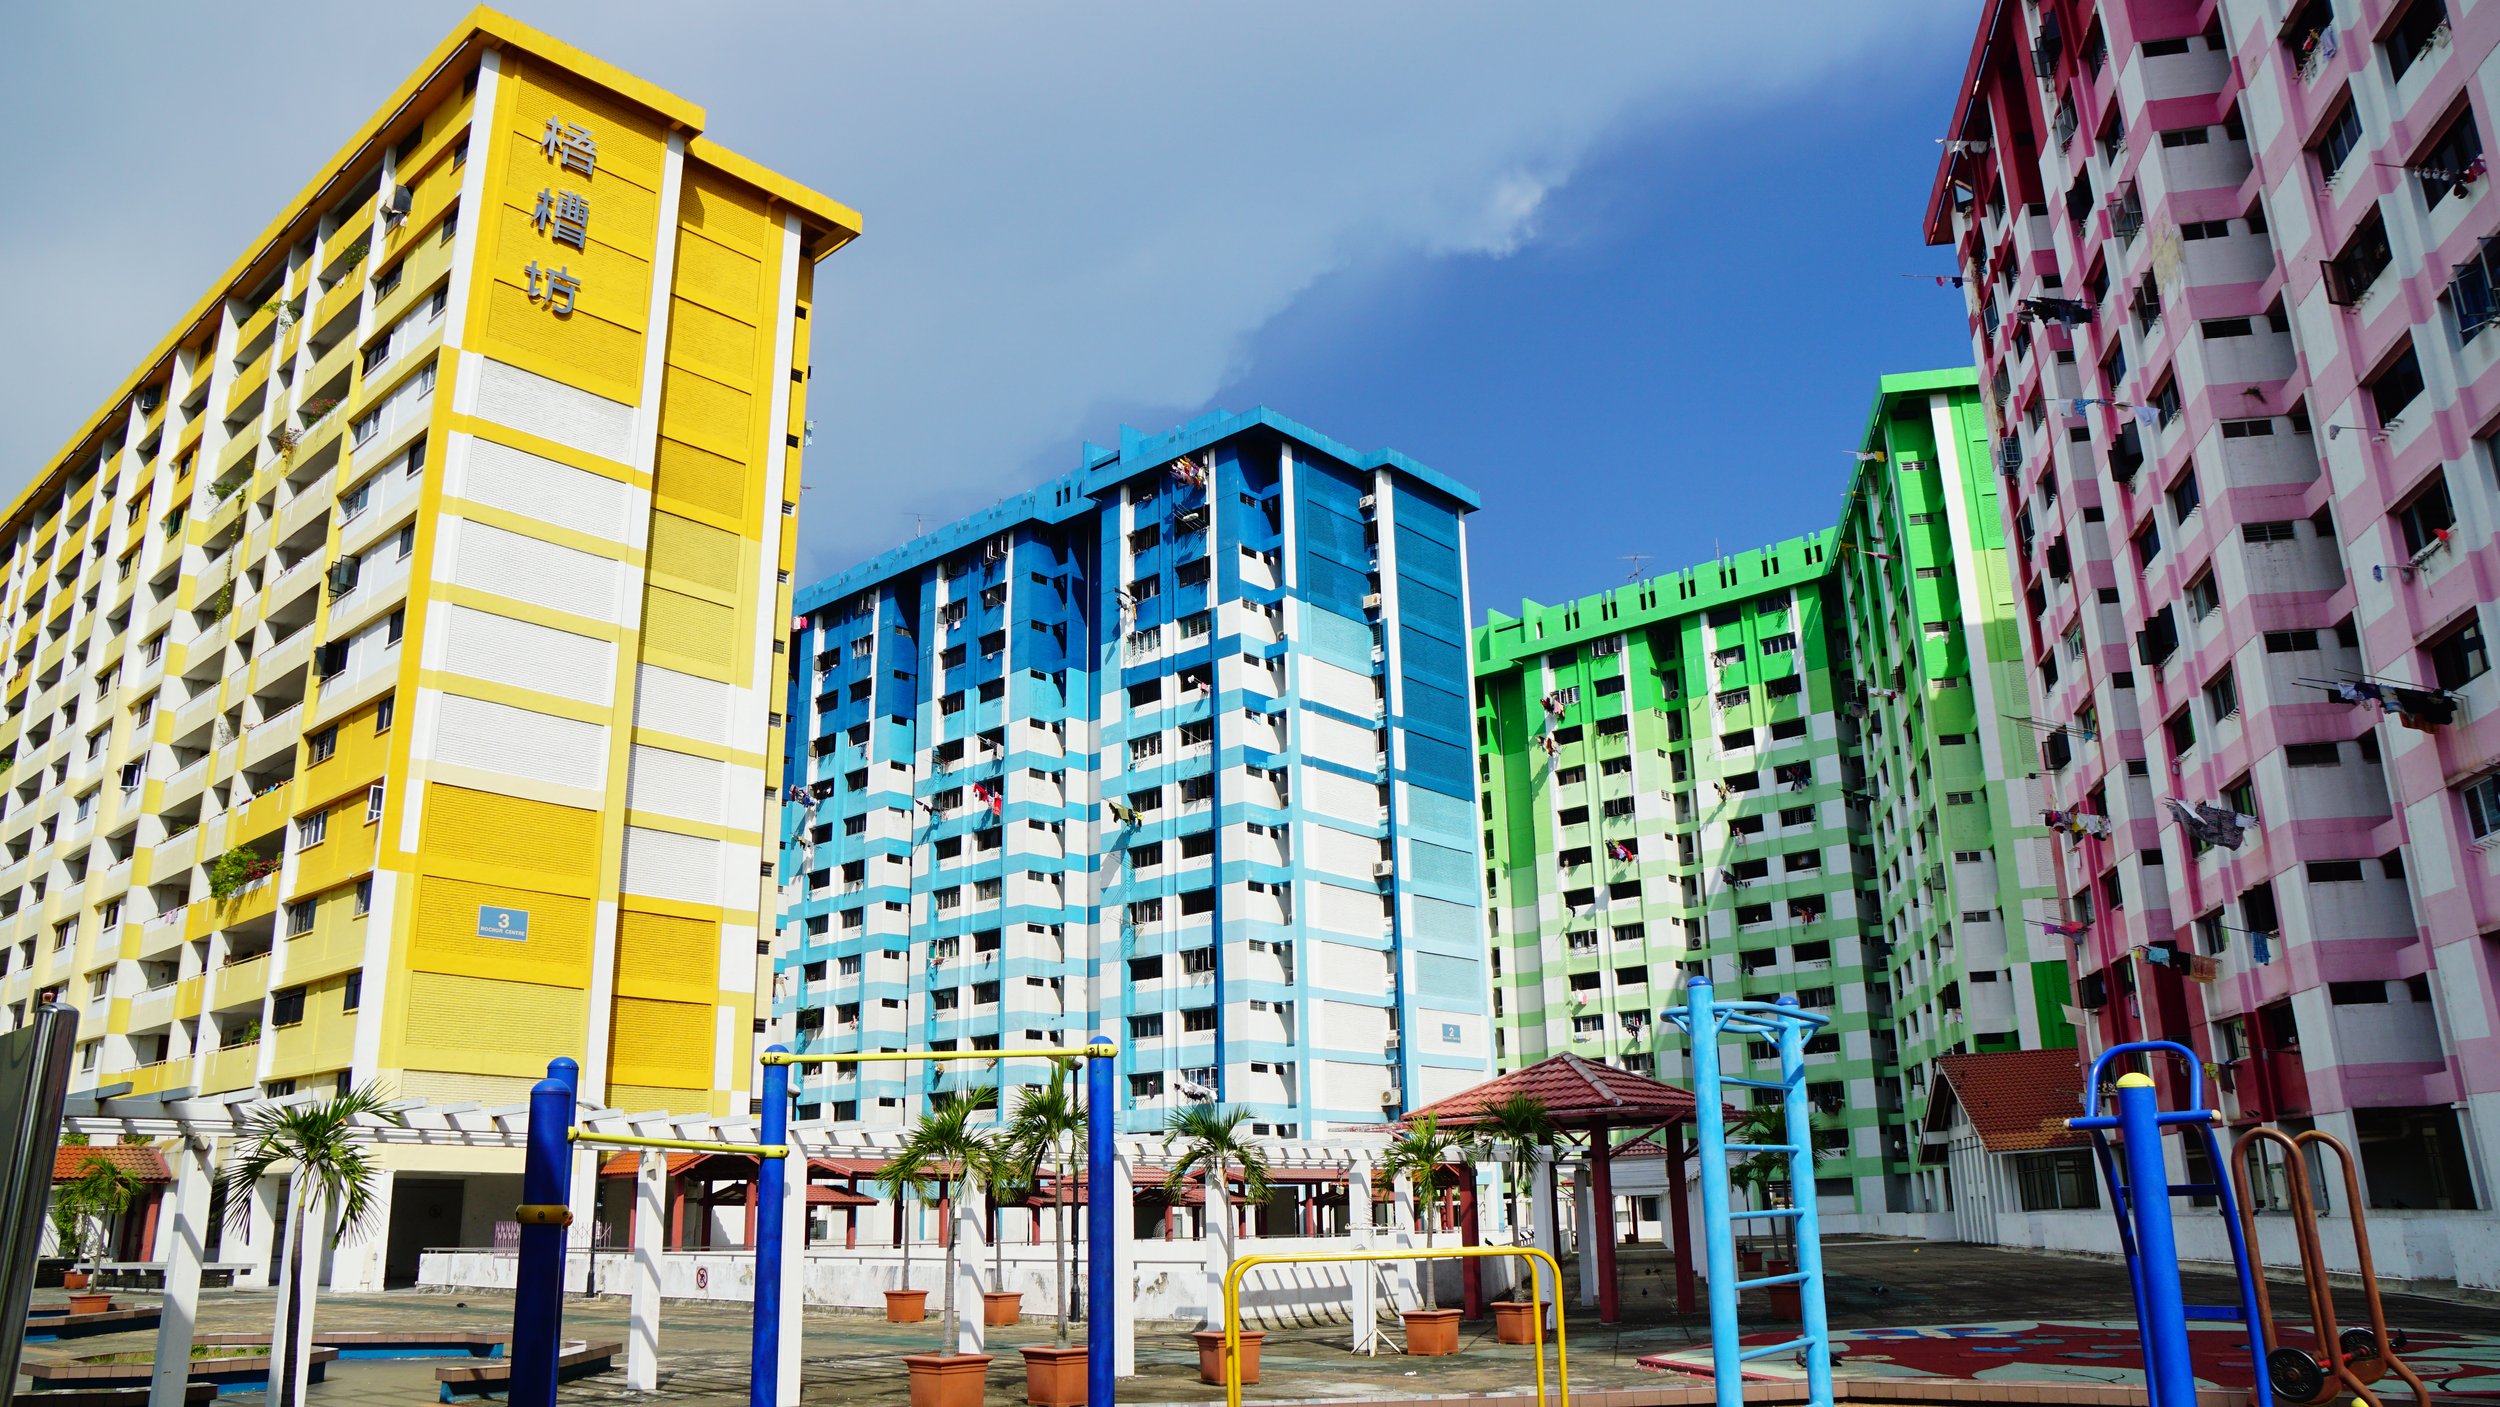 singapore-rocher-centre-estate-housing-rainbow-colourful-photography-architect-freeman-fung-travelDSC03441.JPG